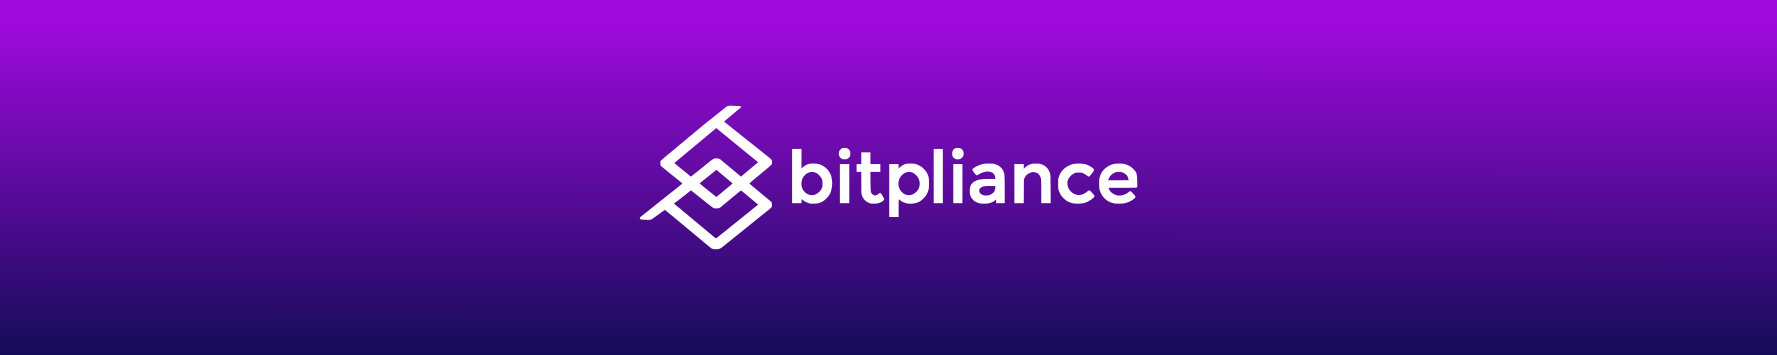 The final logo for Bitpliance